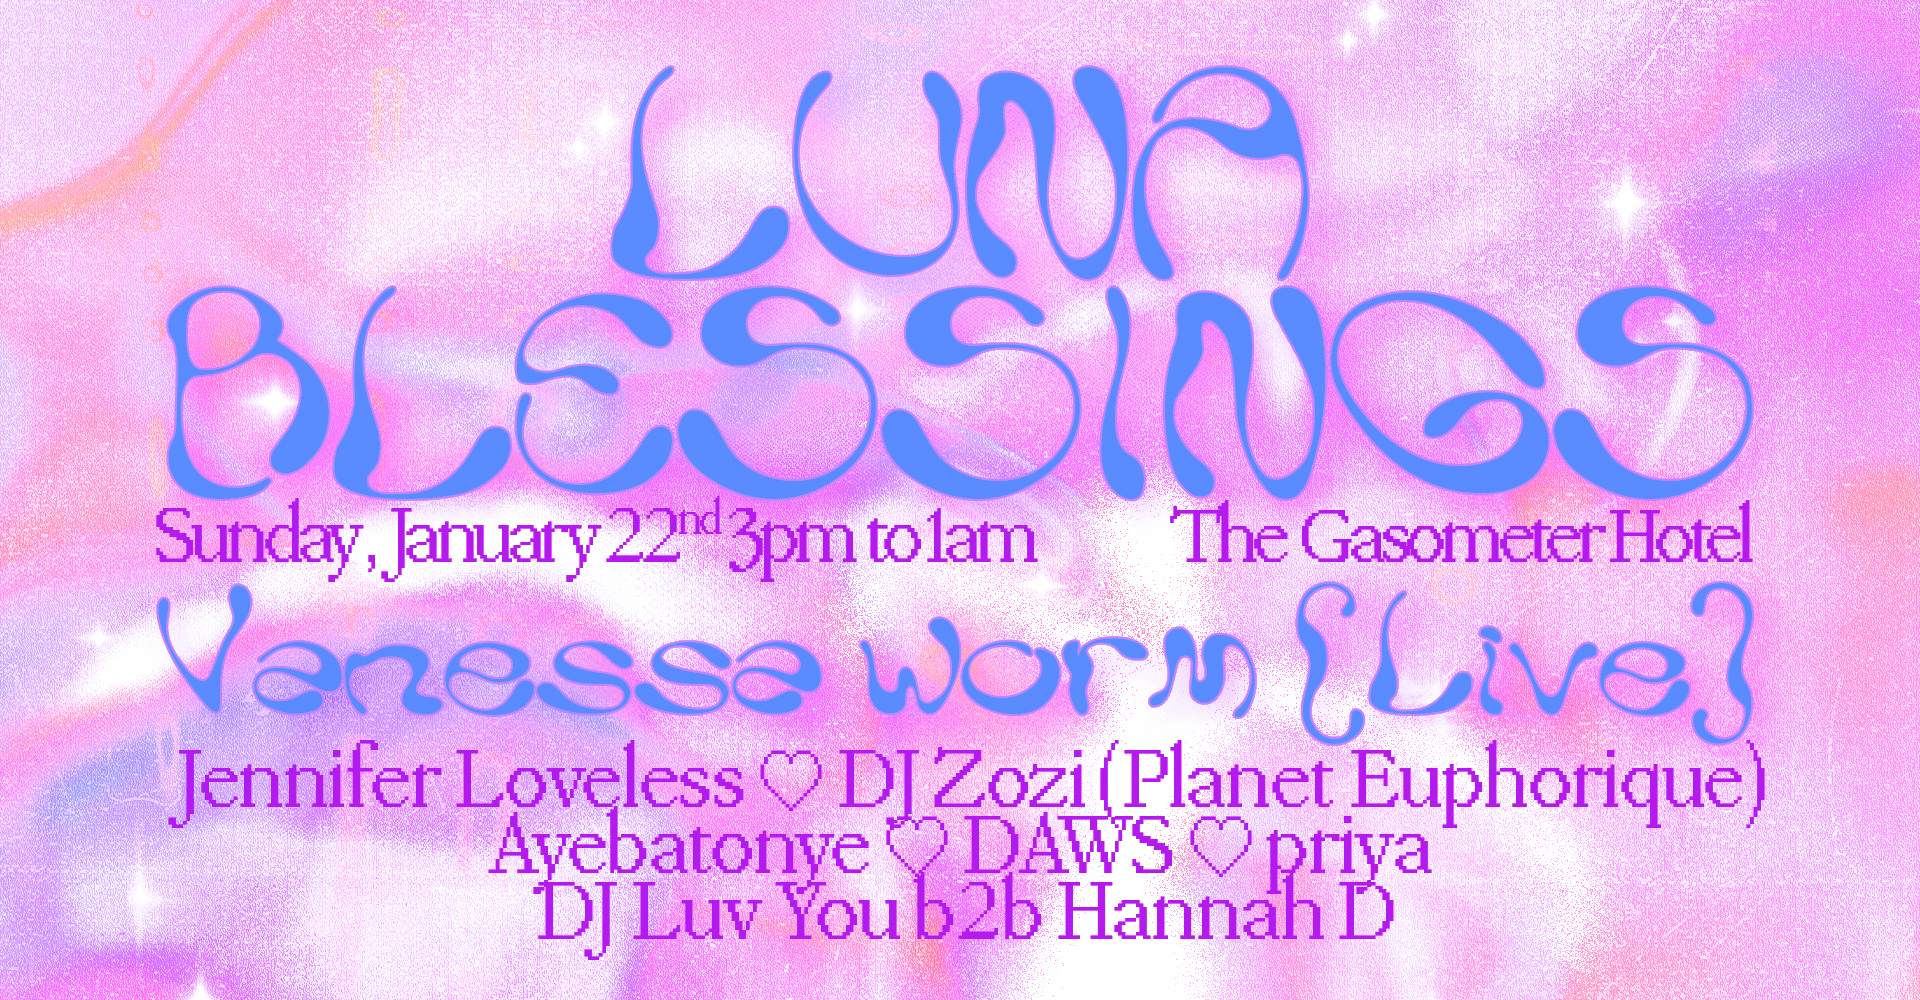 LUNA #9 with Vanessa Worm (live), Jennifer Loveless, DJ Zozi, Ayebatonye, DAWS, priya - フライヤー表